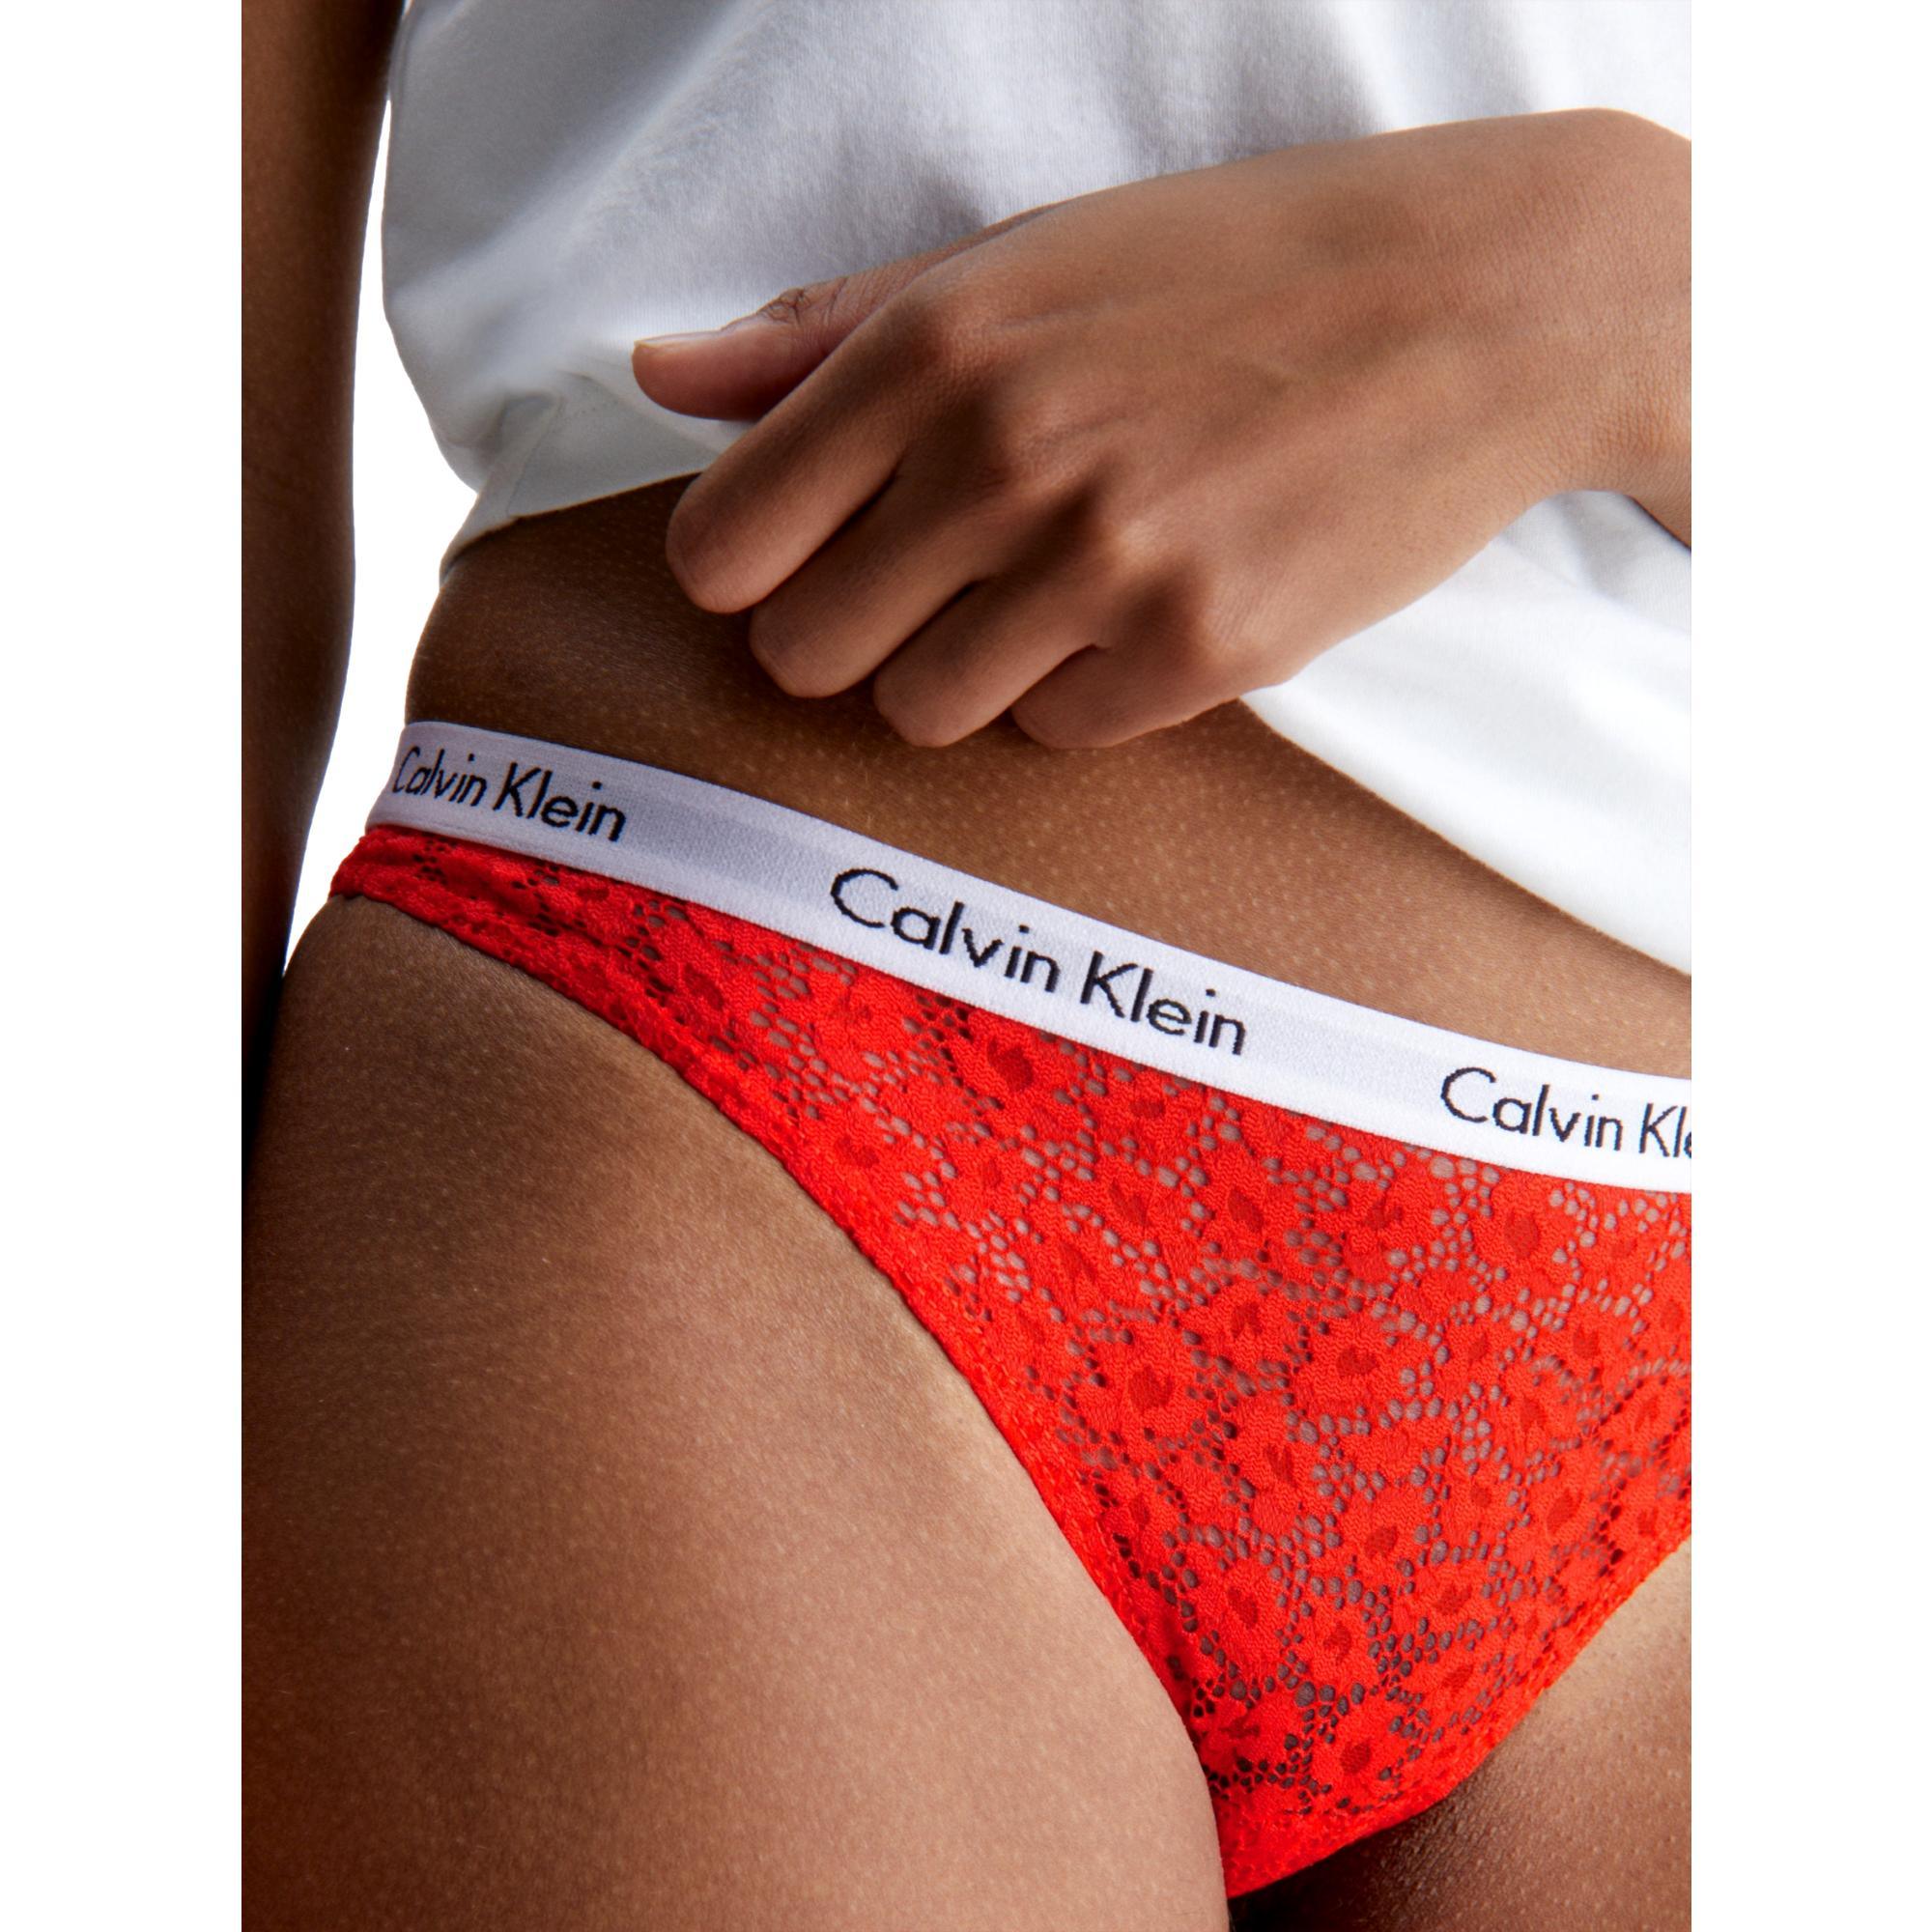 Calvin Klein Women`s Carousel Lace Brazilian Brief 1 Pack (Orange